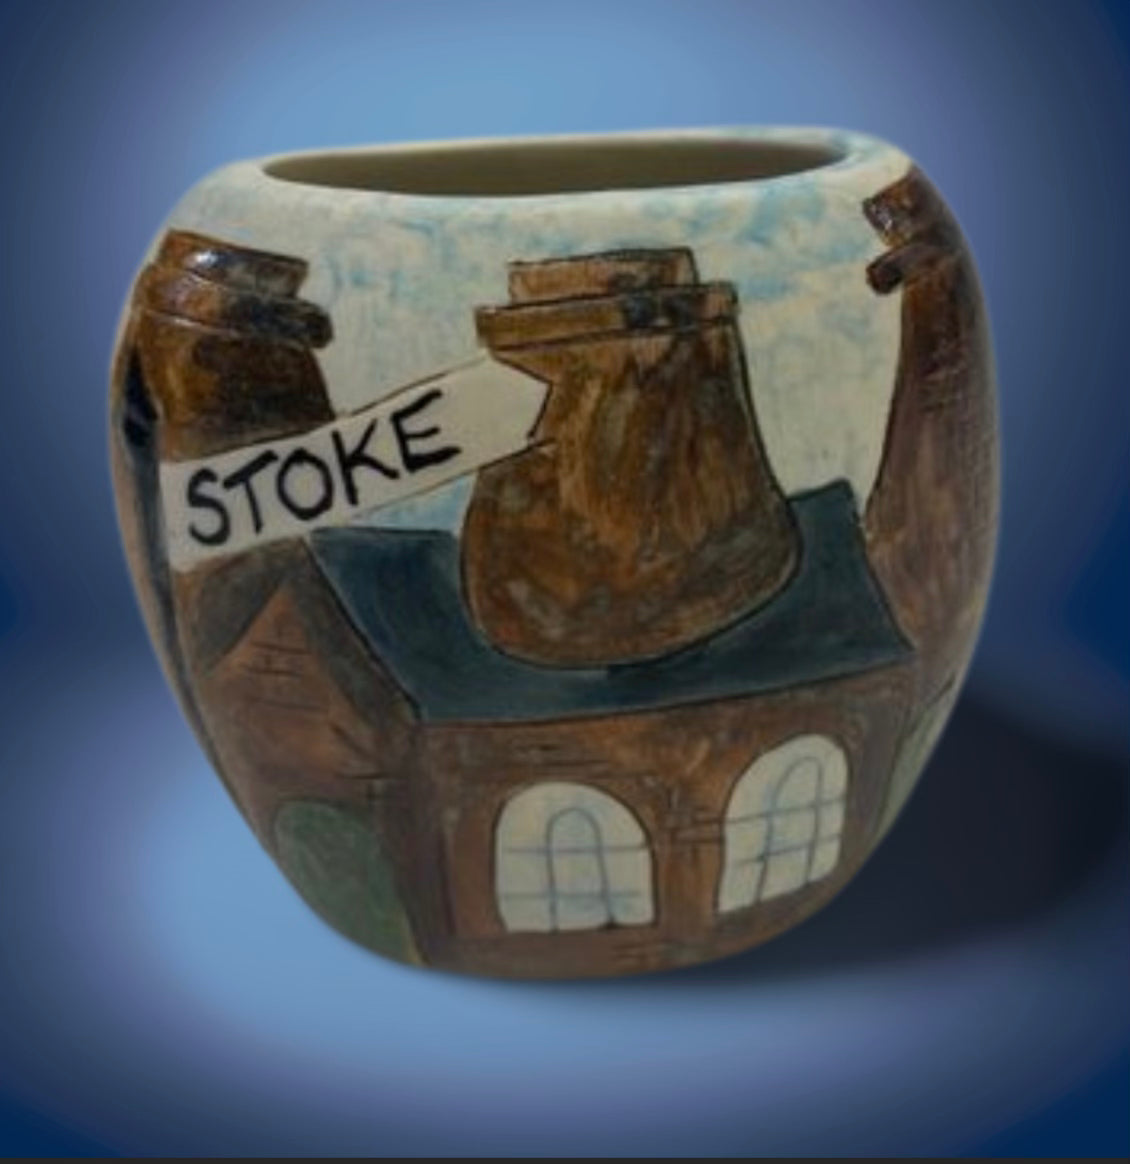 Six towns purse vase Stoke on Trent